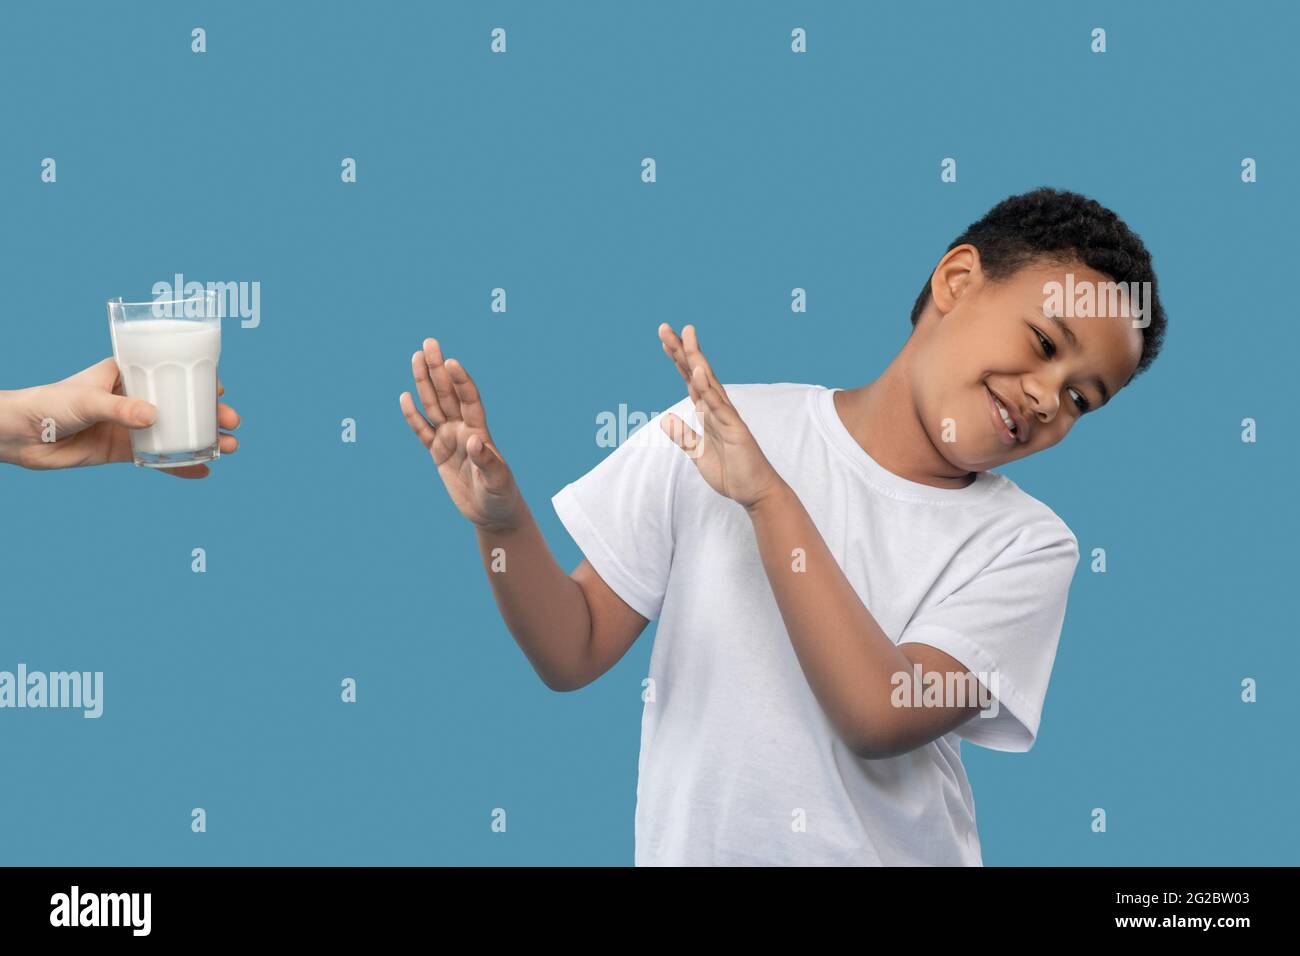 Boy refusing offered glass of milk Stock Photo